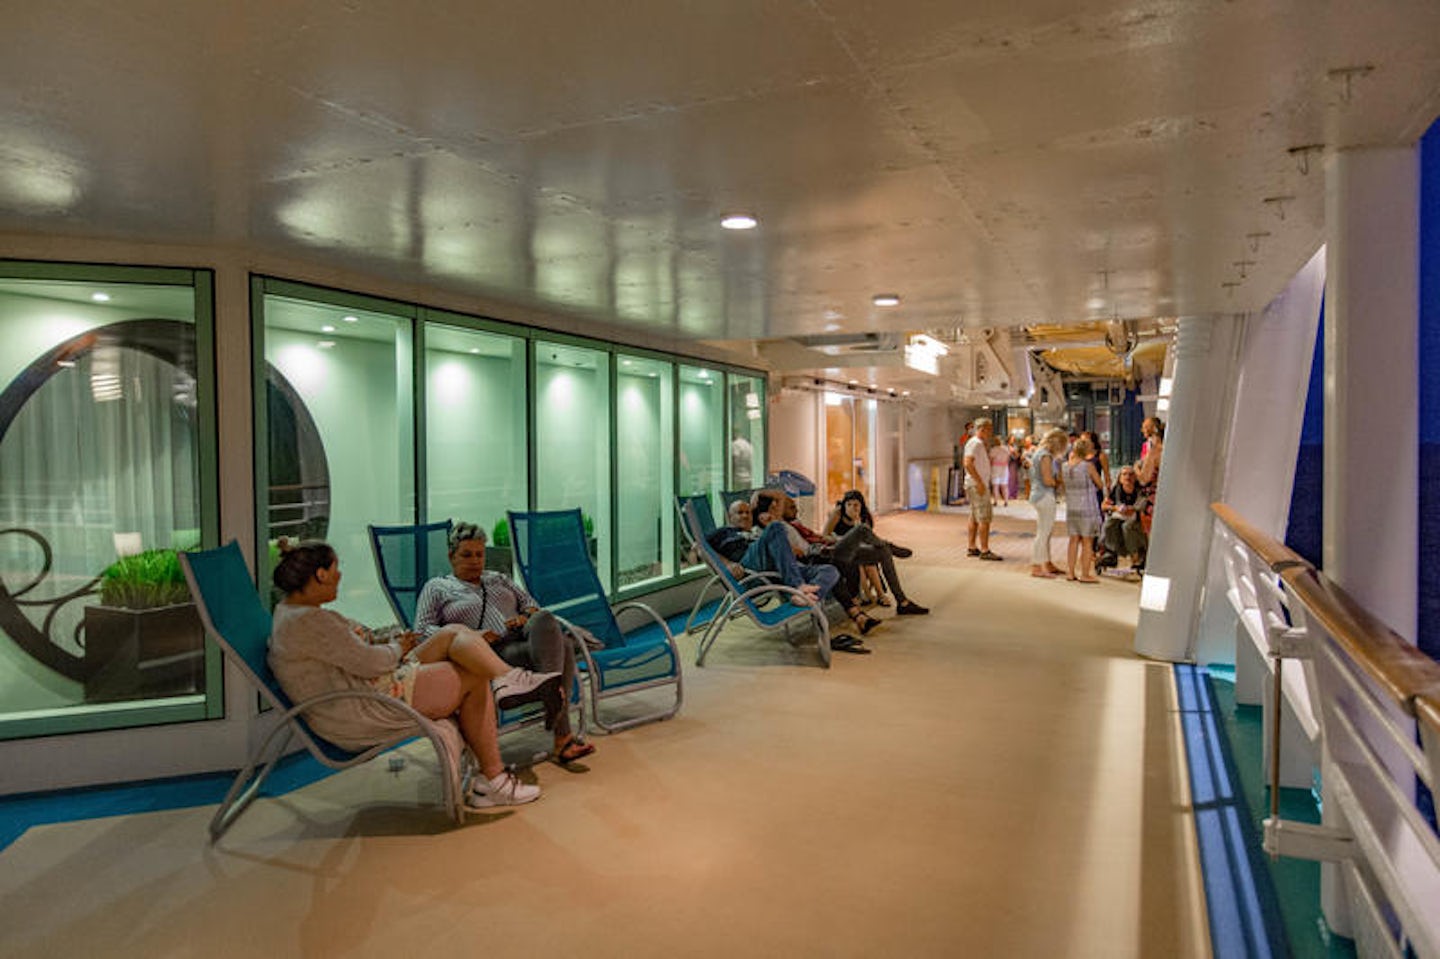 Exterior Decks on Mariner of the Seas